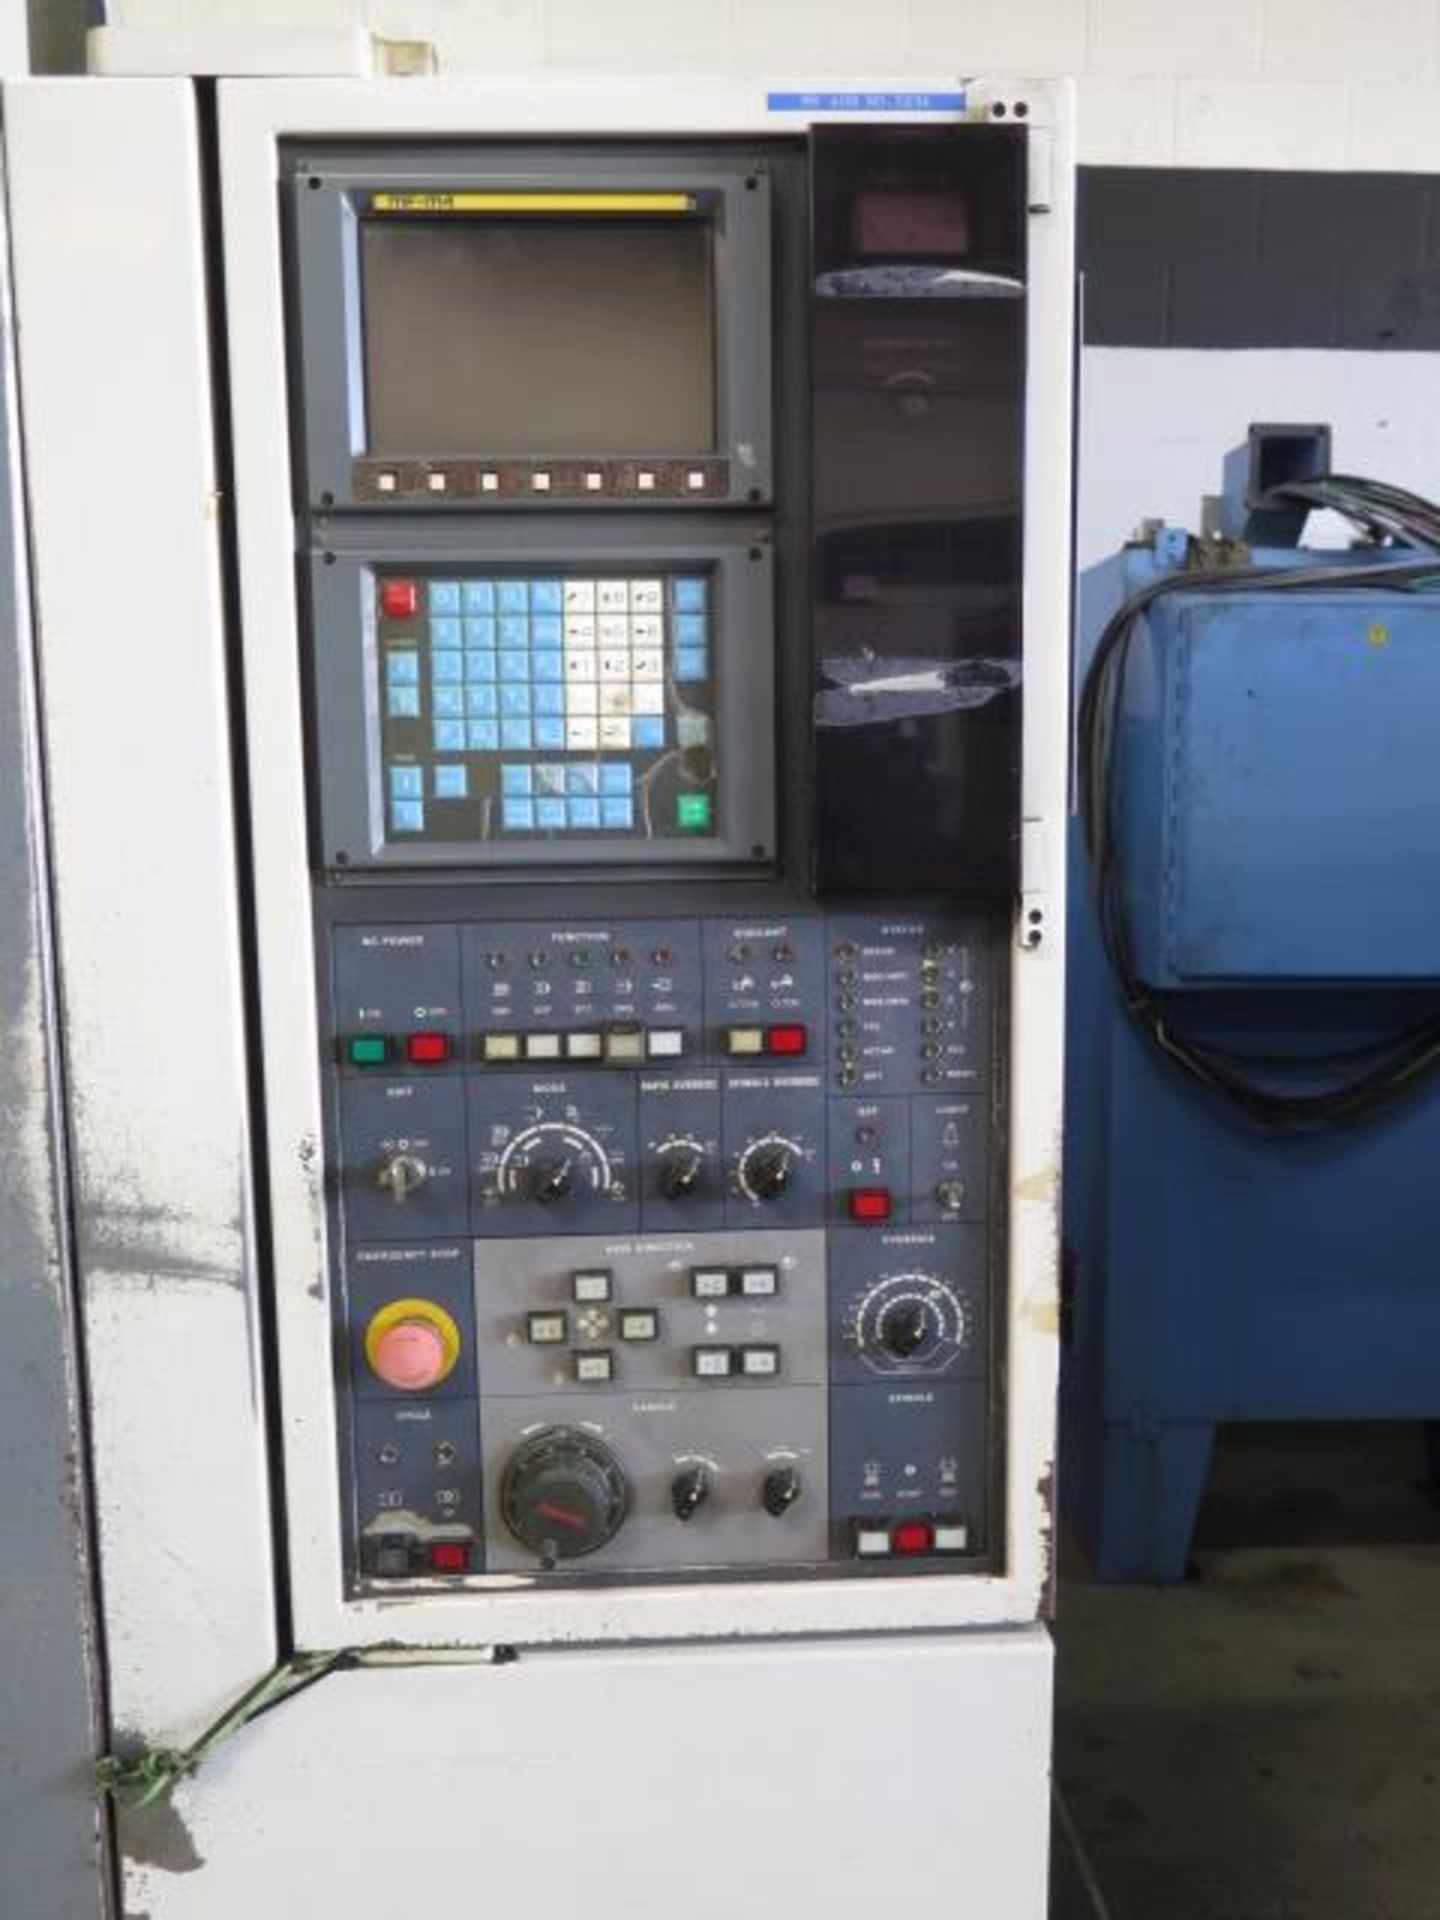 Mori Seiki MV-40 CNC VMC s/n 3234 w/ Fanuc MF-M4 Controls, 20 Station ATC, SOLD AS IS - Image 5 of 15